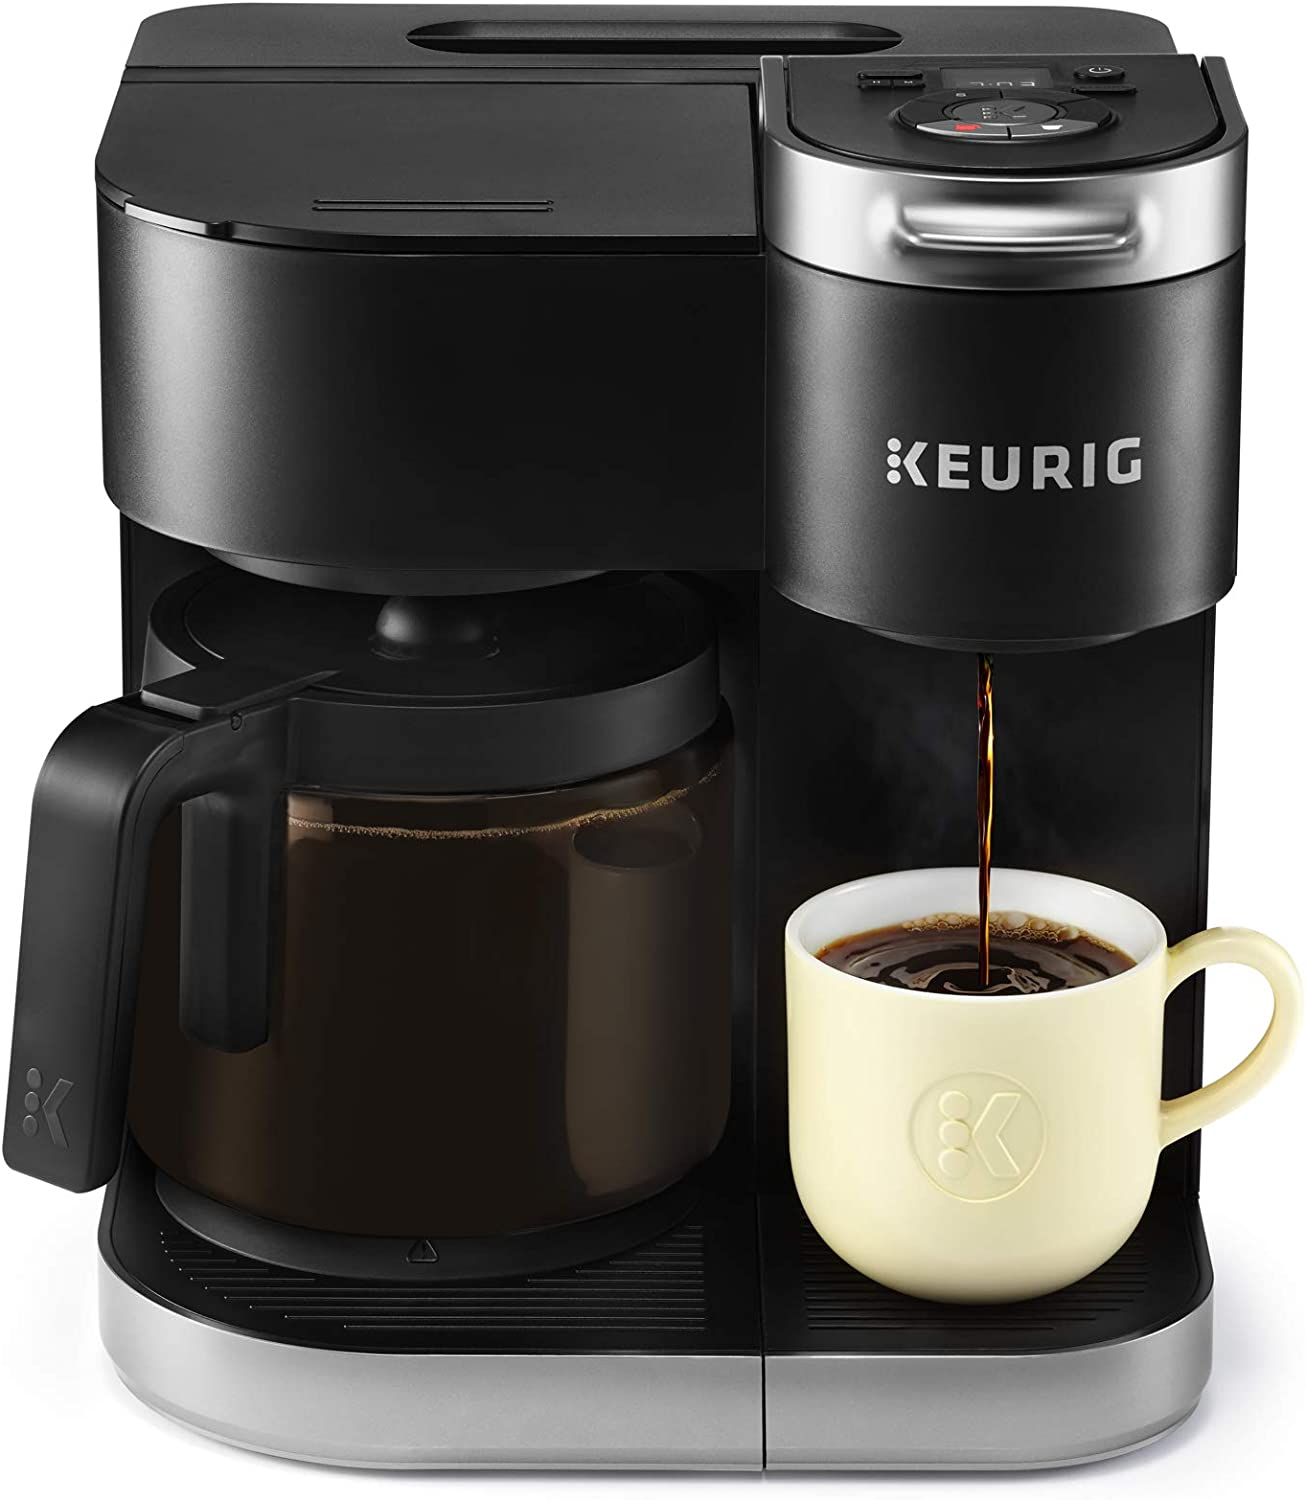 Keurig K-Duo Coffee Maker - Single Serve and 12-Cup Carafe Drip Coffee Brewer (Black) $139.99